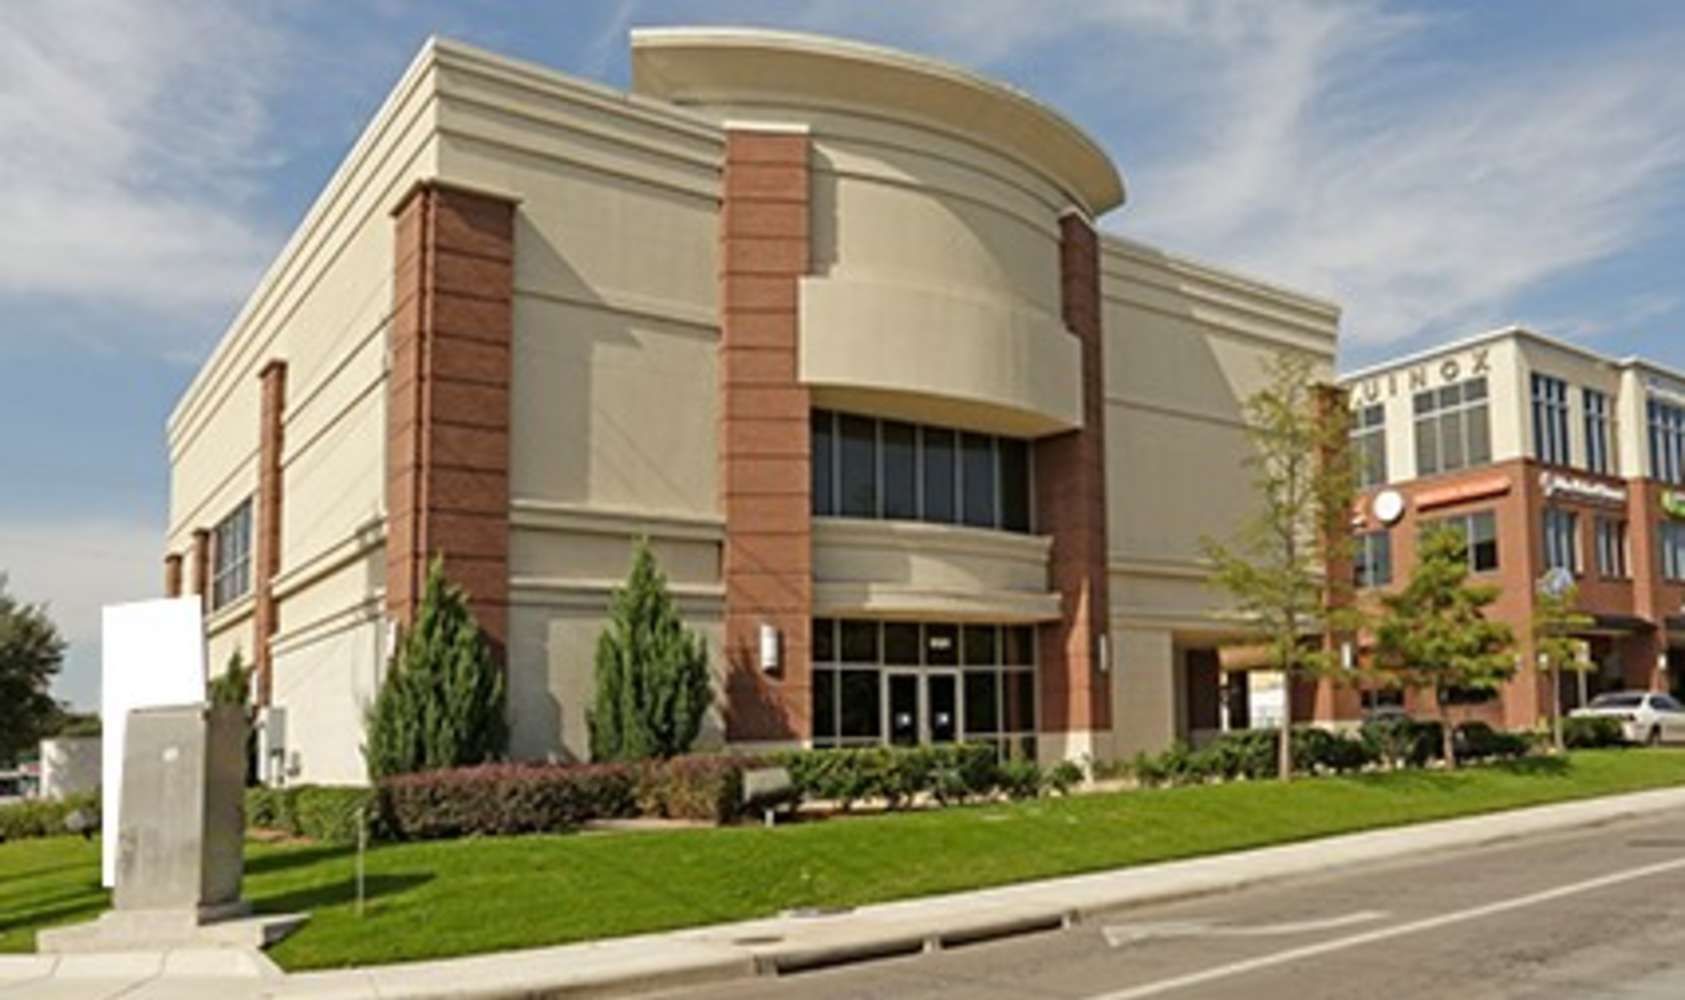 Retail Dallas - Bank site for sublease 7883219 - NORTHCREST - Dallas, TX